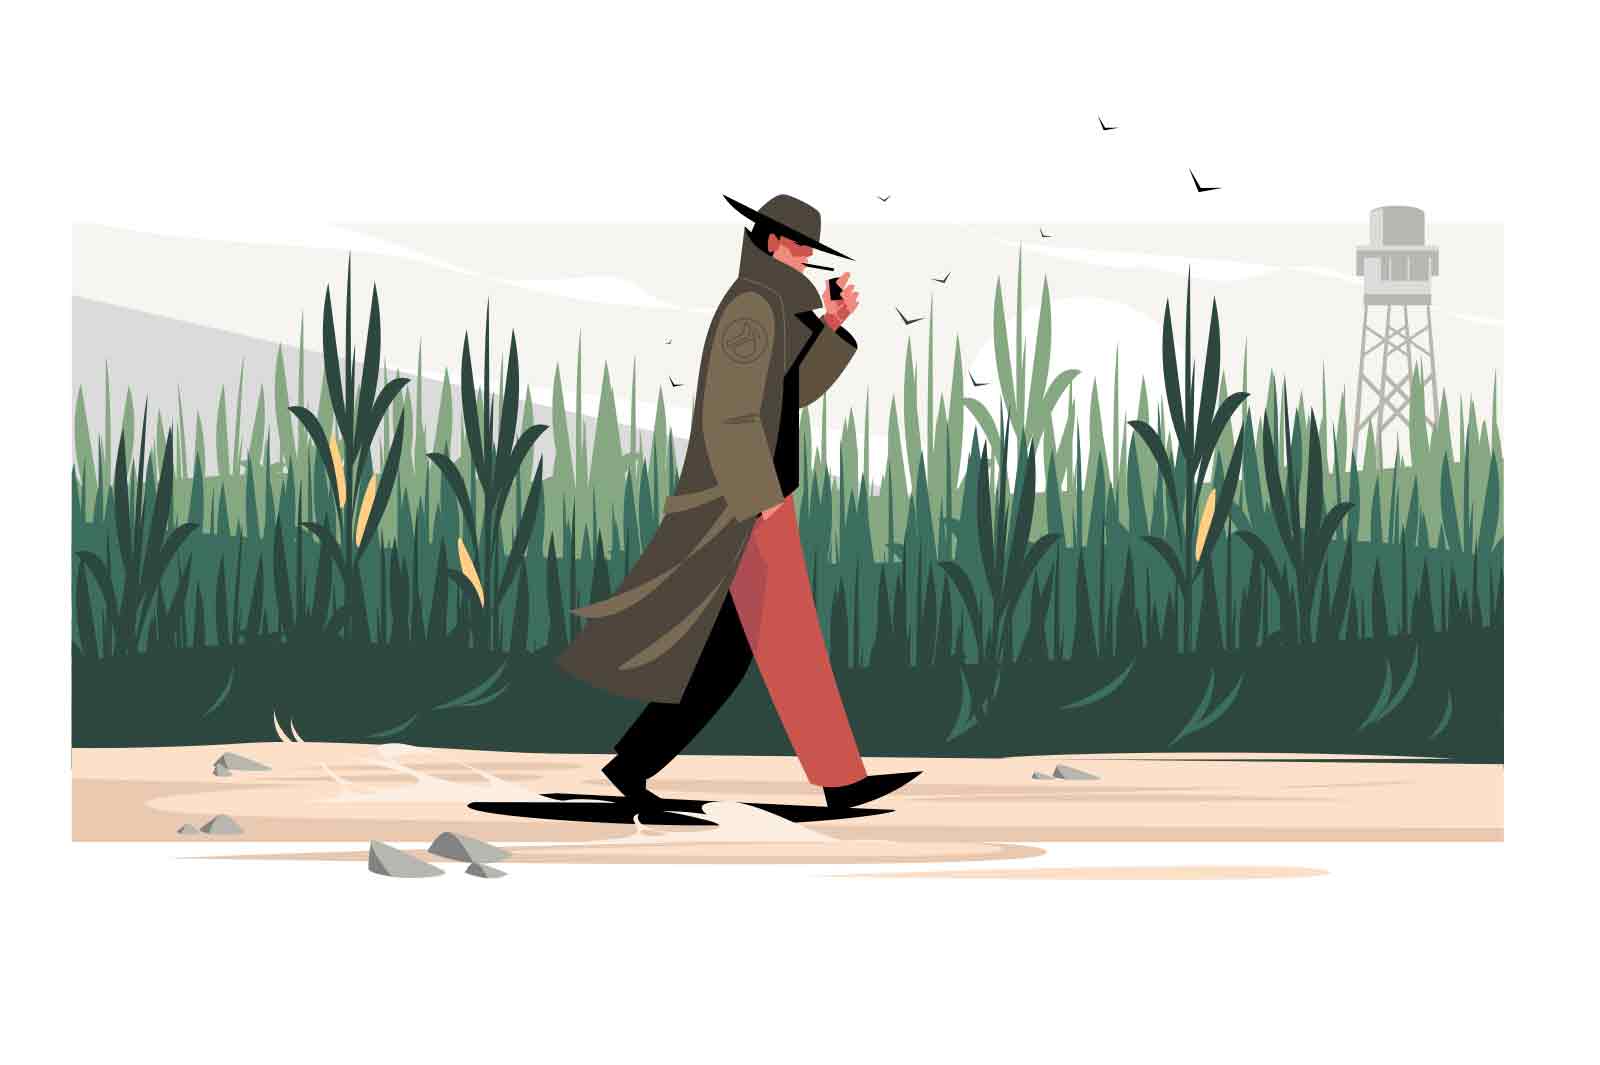 Strange man in coat walk past corn fields vector illustration. Person fire cigar flat style. Farm agricultural landscape, natural concept